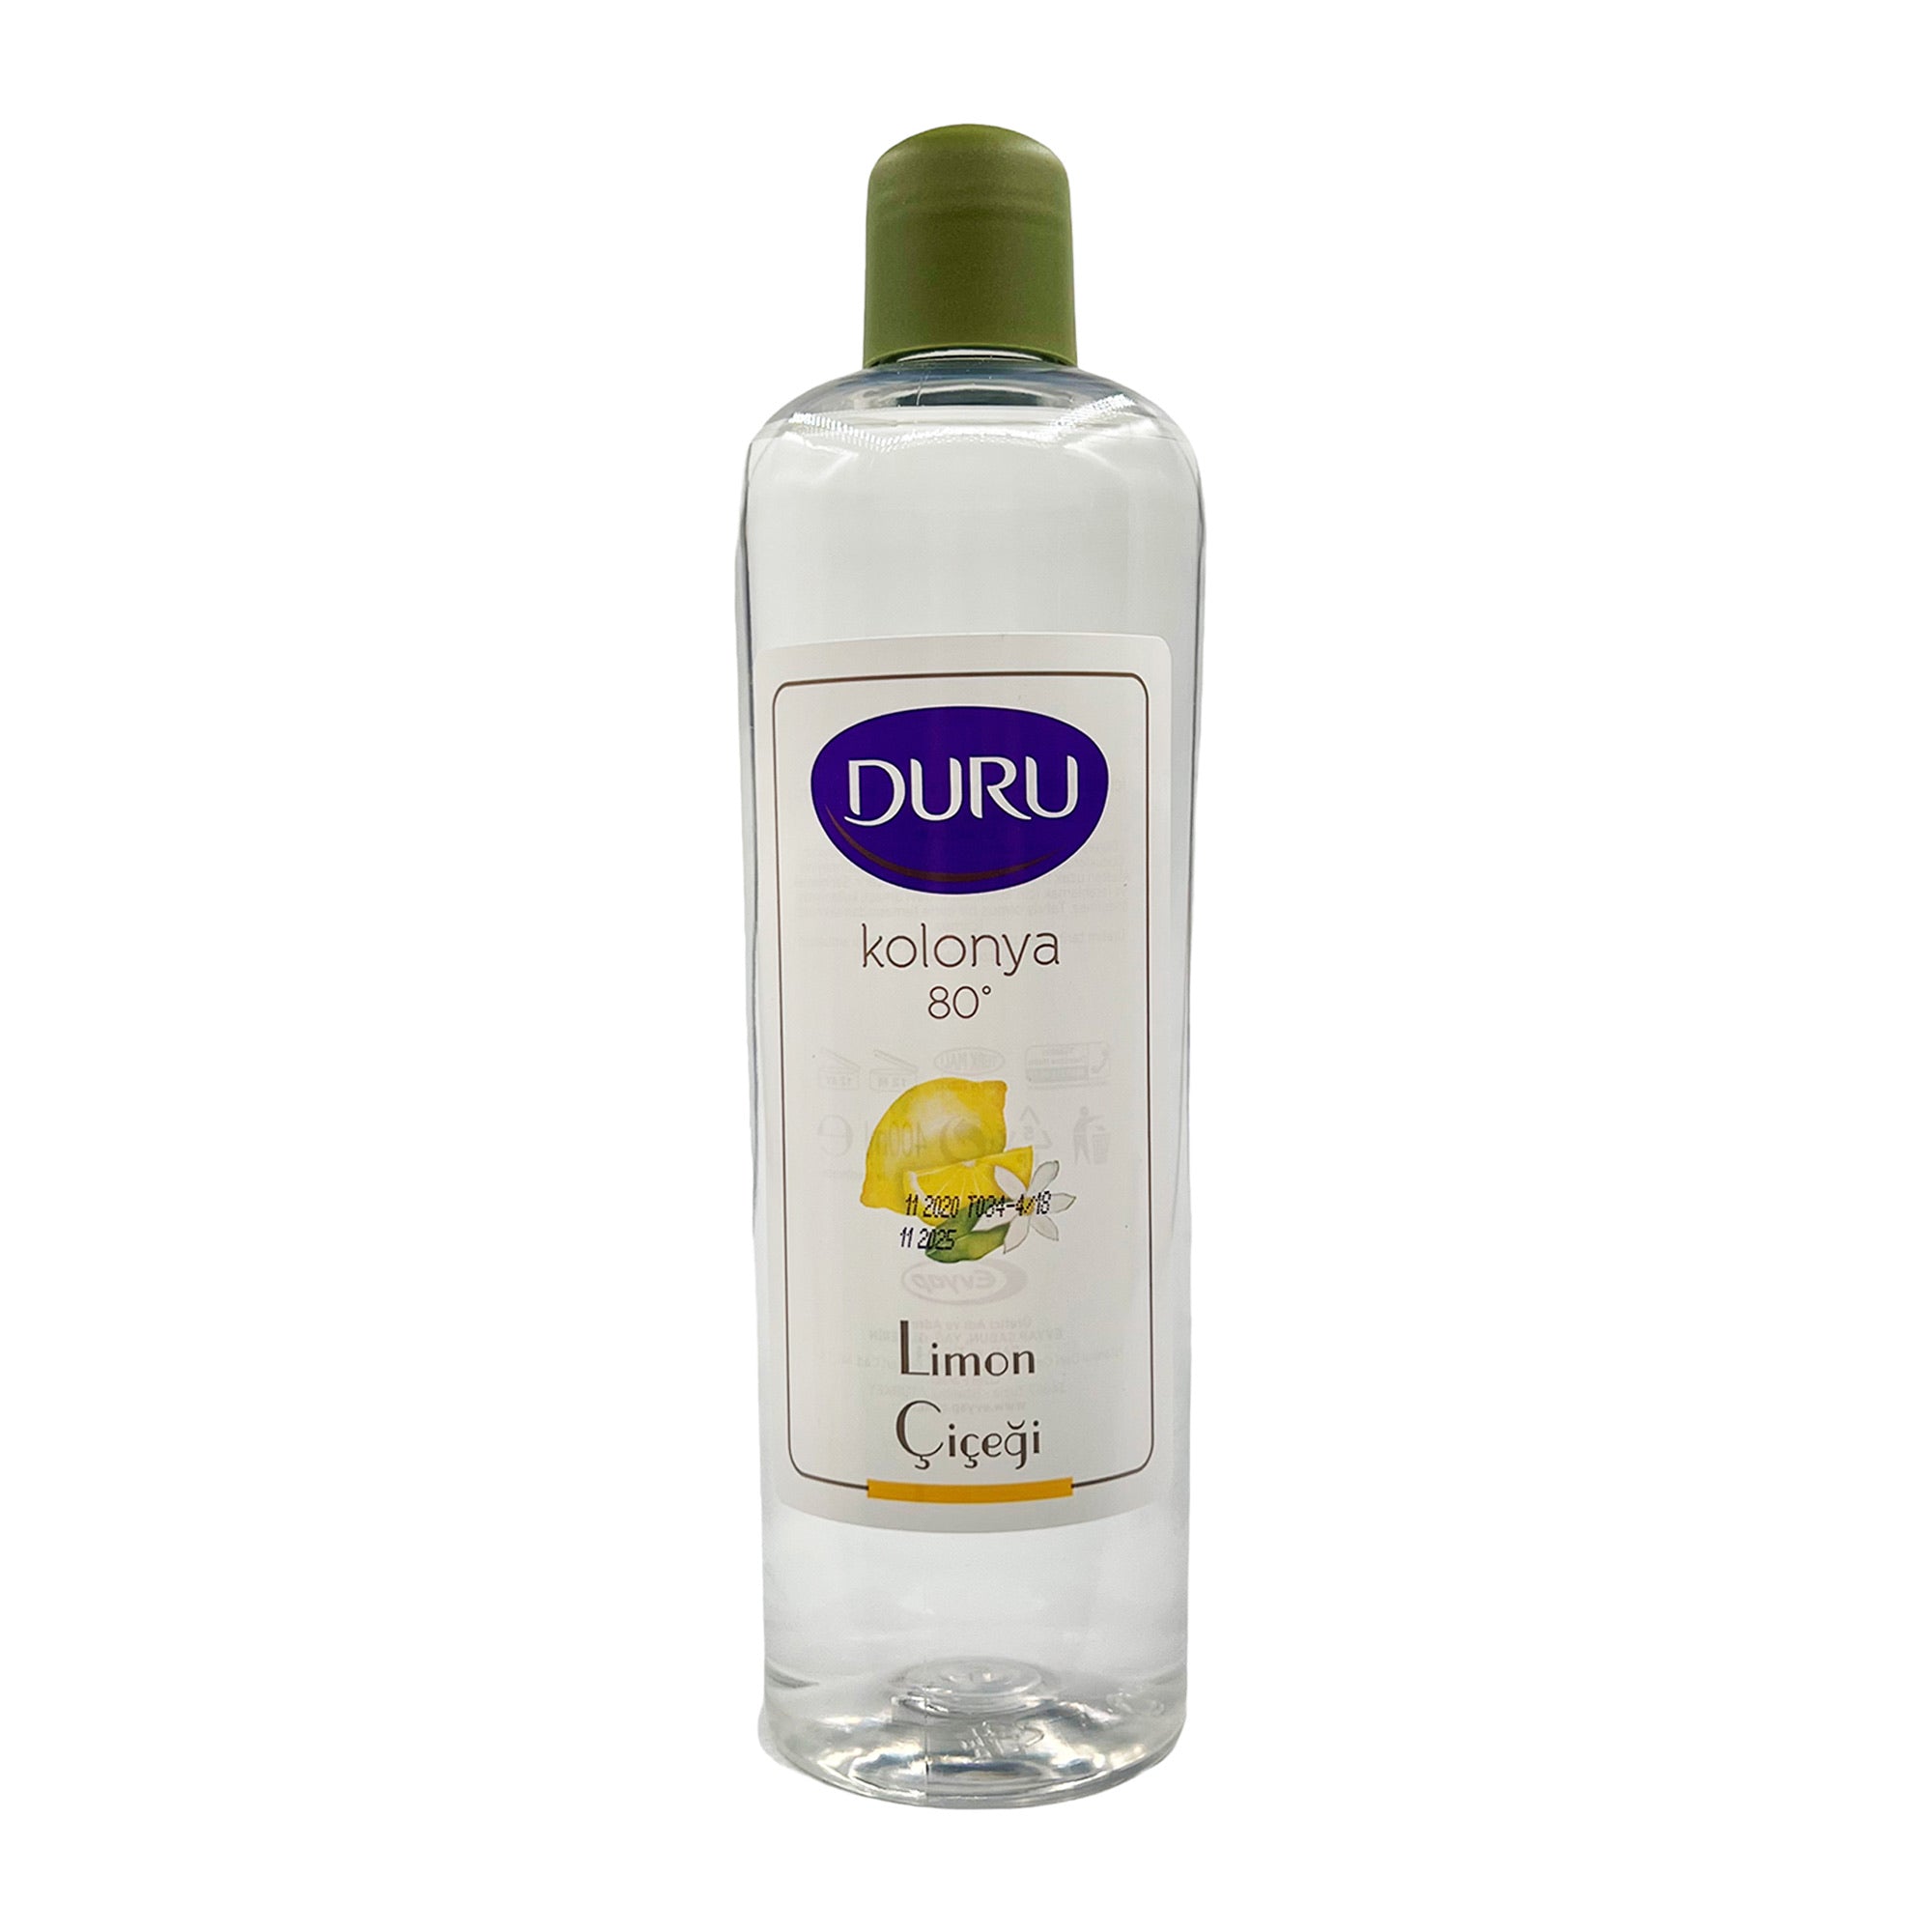 Duru - Lemon Cologne Traditional Turkish Cologne Aftershave Citrus 400ml